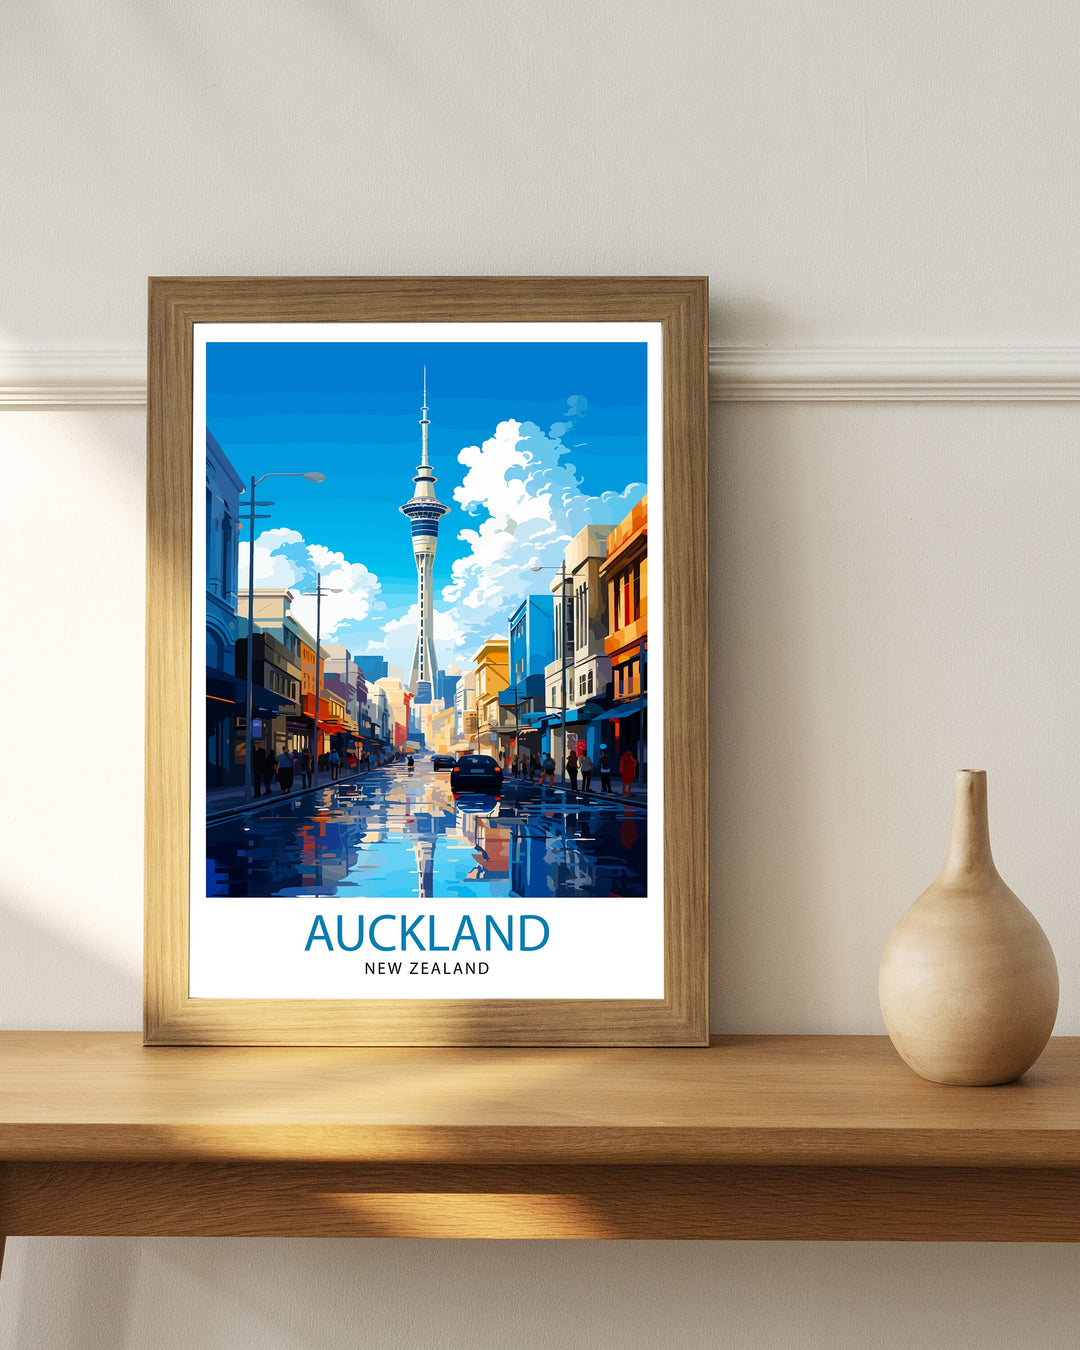 Auckland New Zealand Travel Poster Auckland Wall Decor Vibrant City Poster New Zealand Art Skyline Illustration Decorative Wall Art Gift Idea